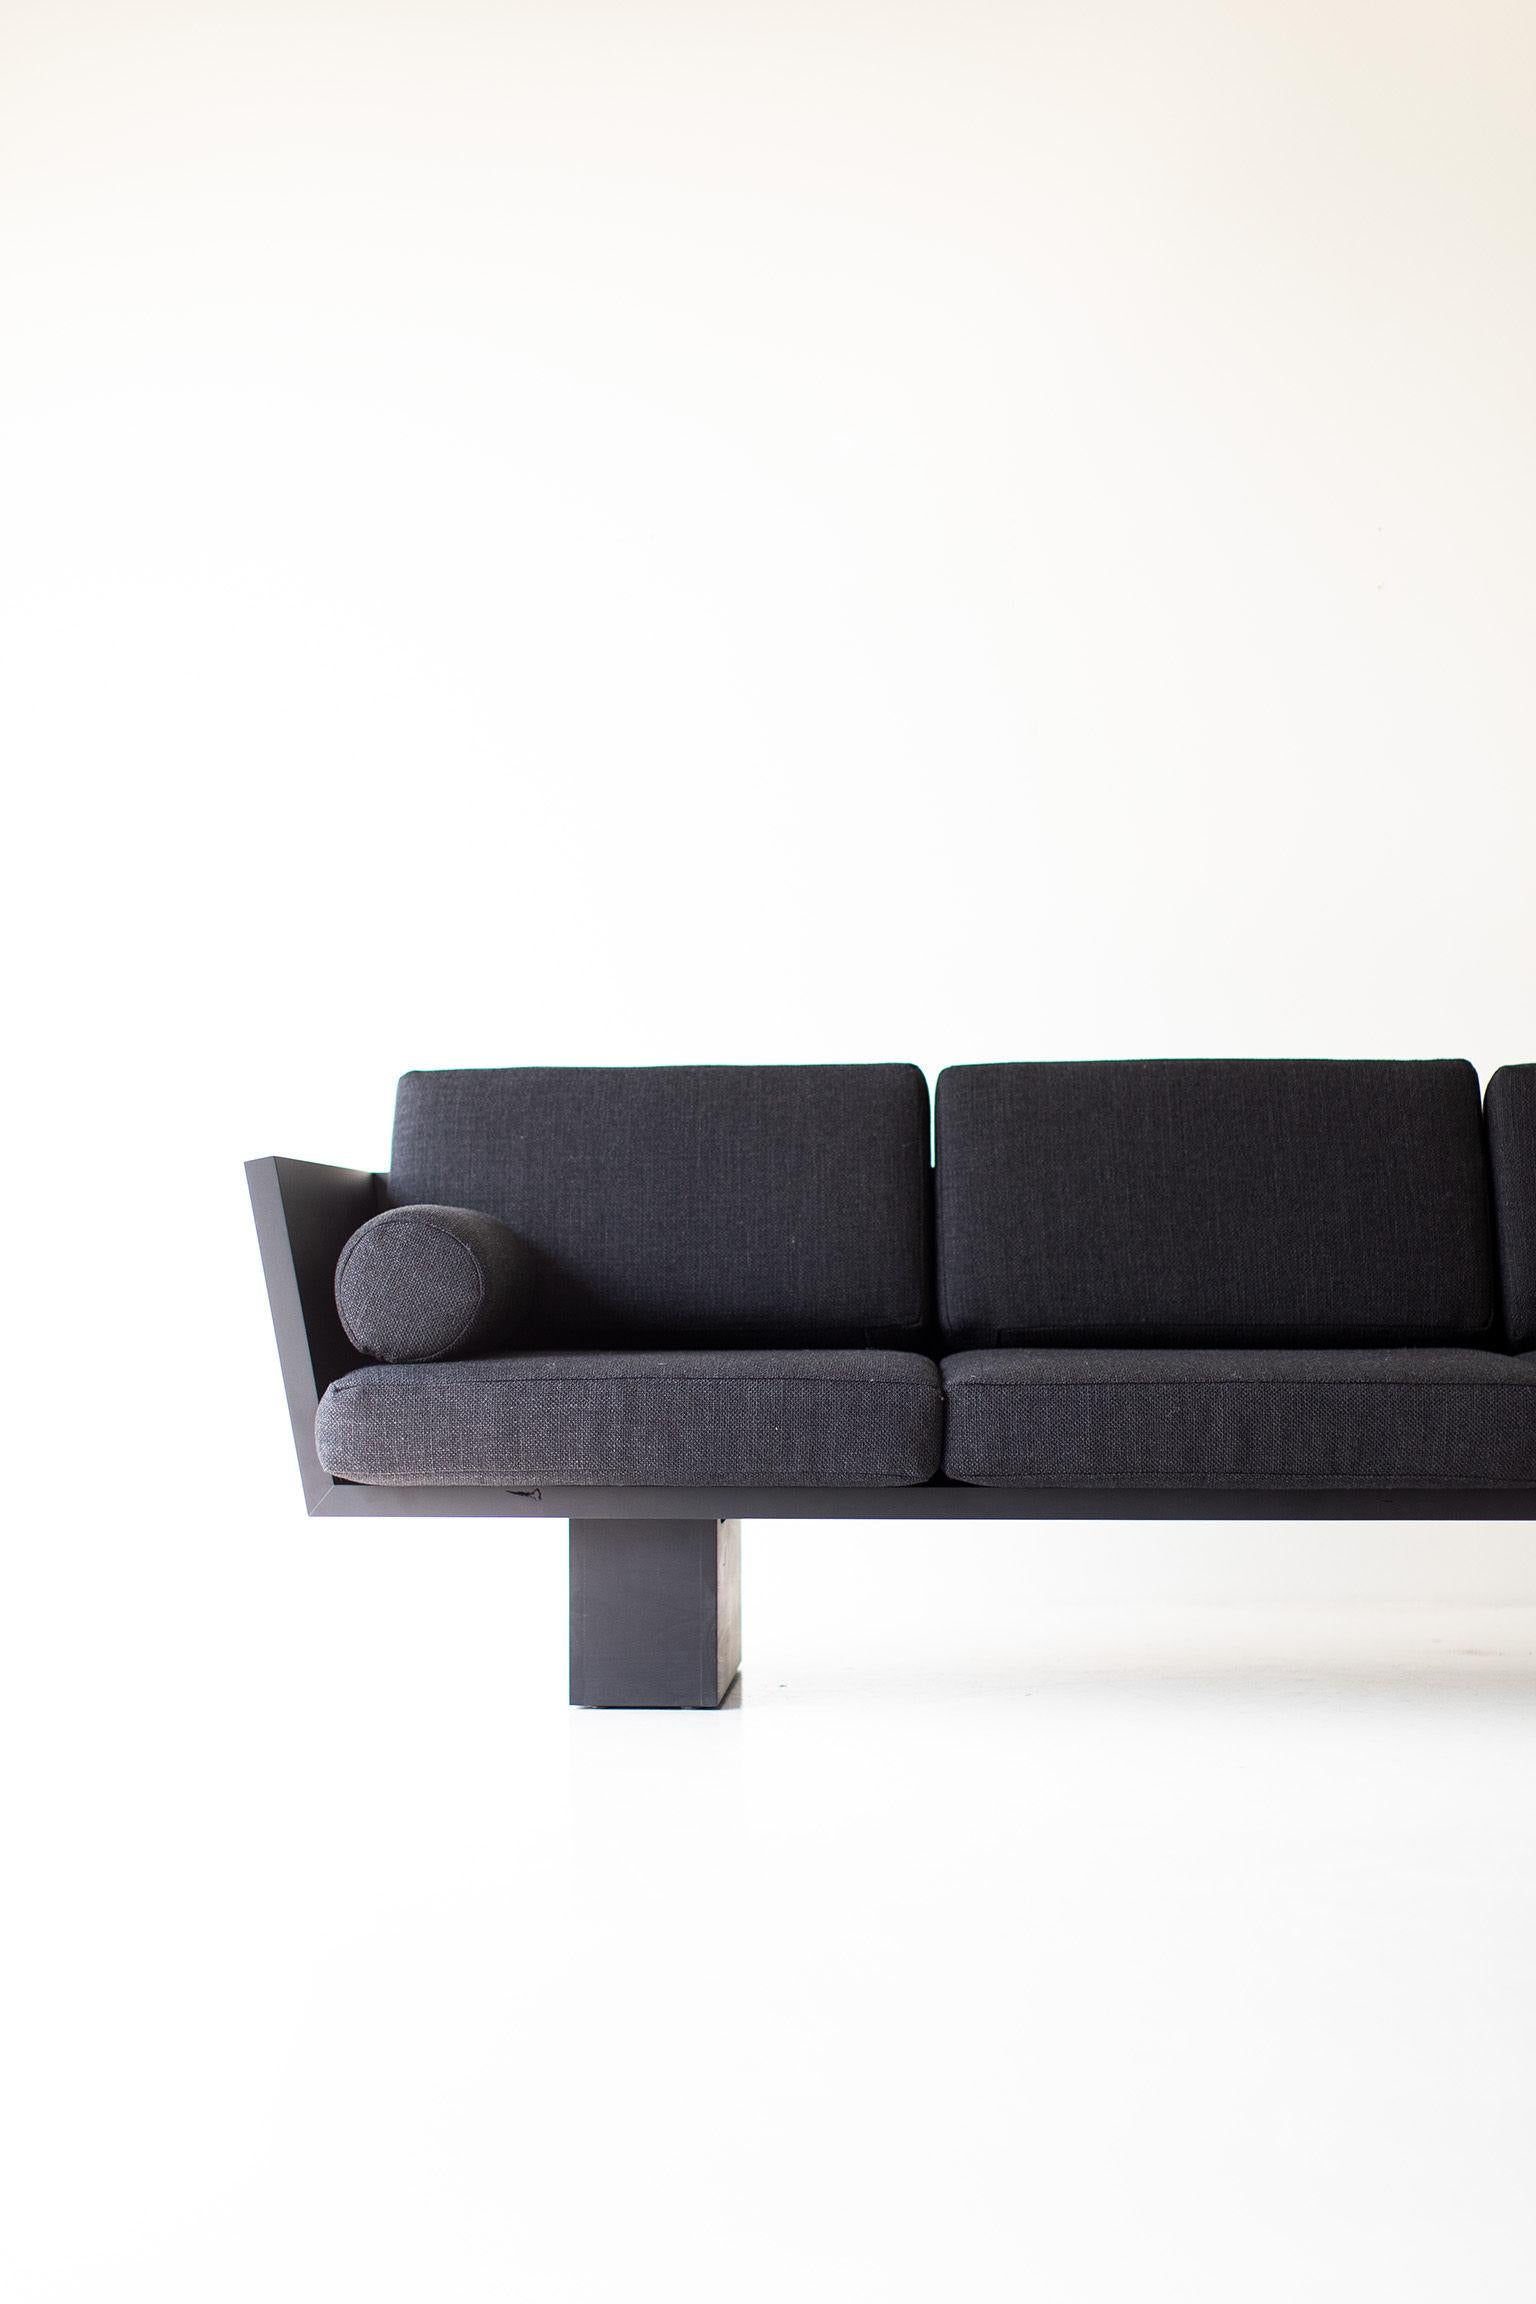 Suelo Modern Outdoor Sofa For Sale 5